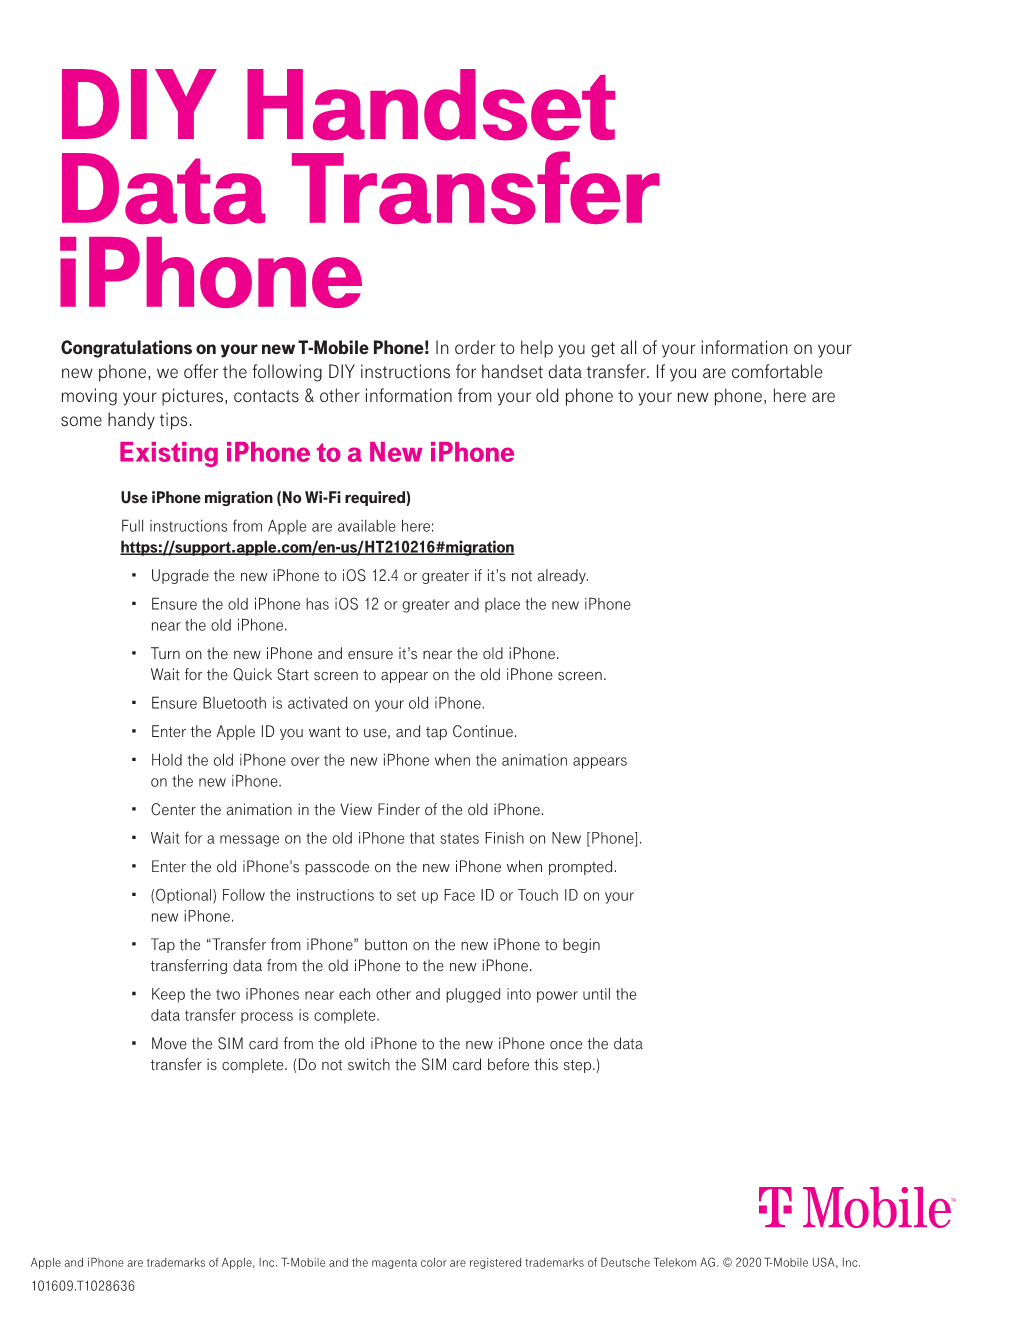 DIY Handset Data Transfer Iphone